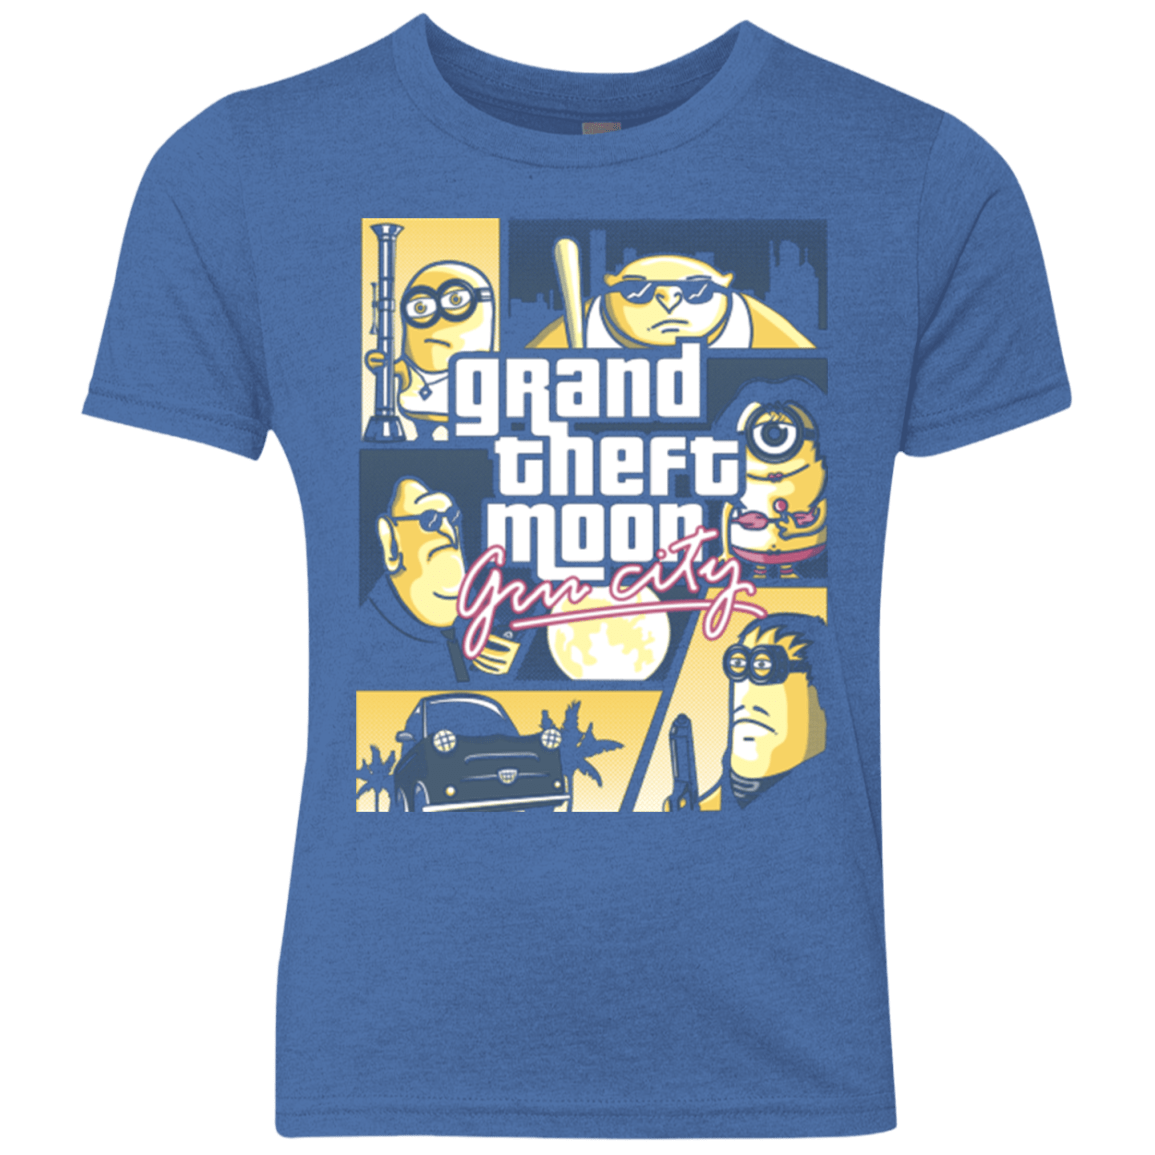 T-Shirts Vintage Royal / YXS Grand theft moon Youth Triblend T-Shirt